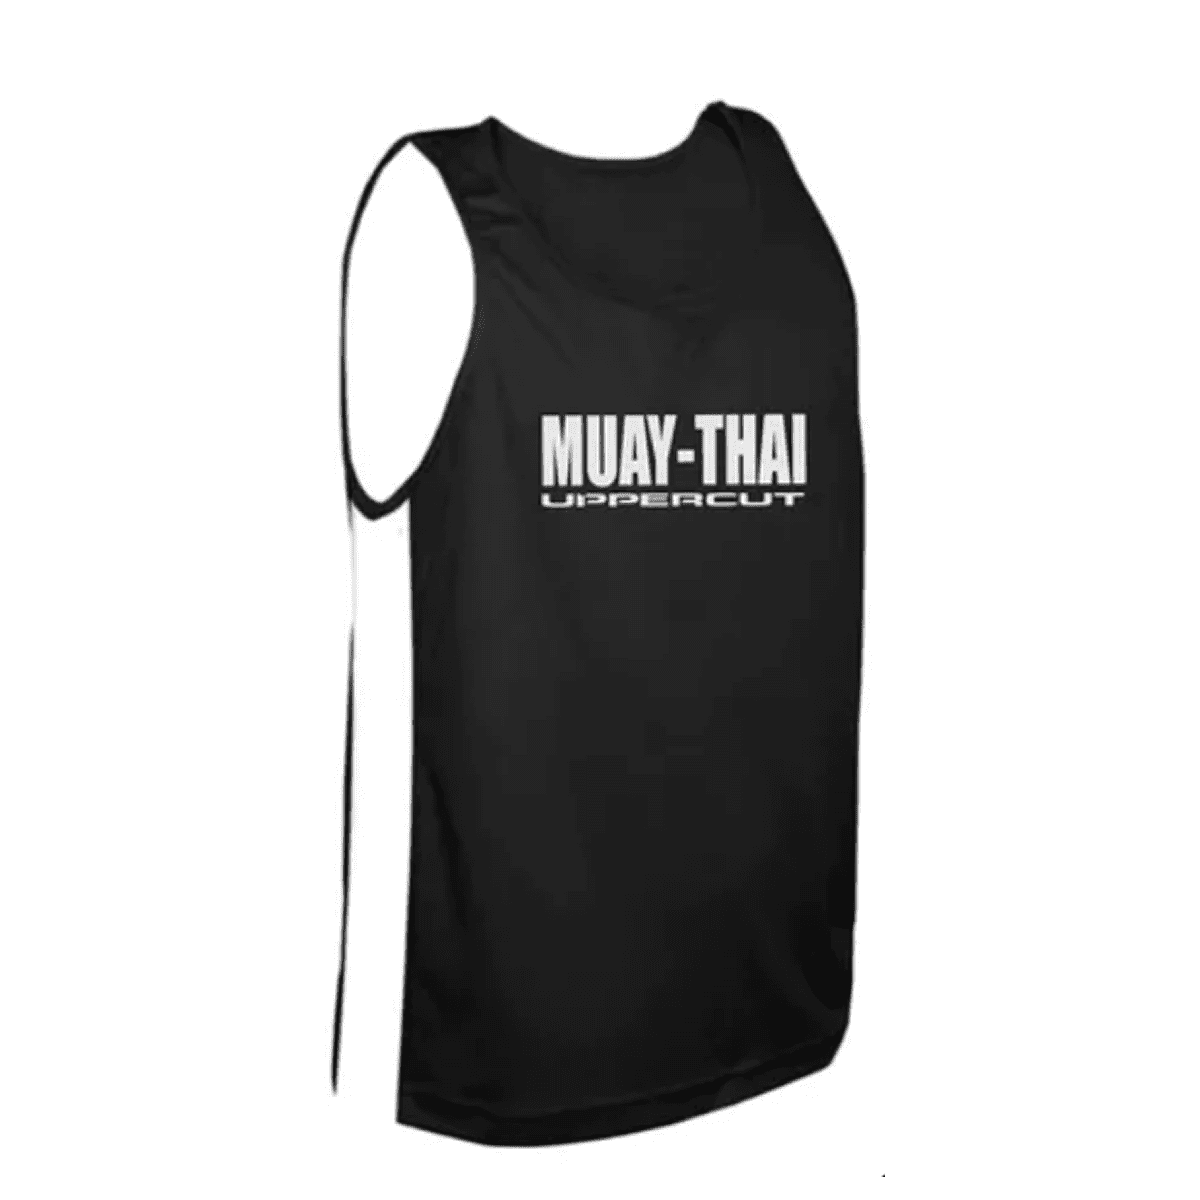 Regata Esportiva Dry Fit - Muay Thai - Preta/Branca - UV-50+